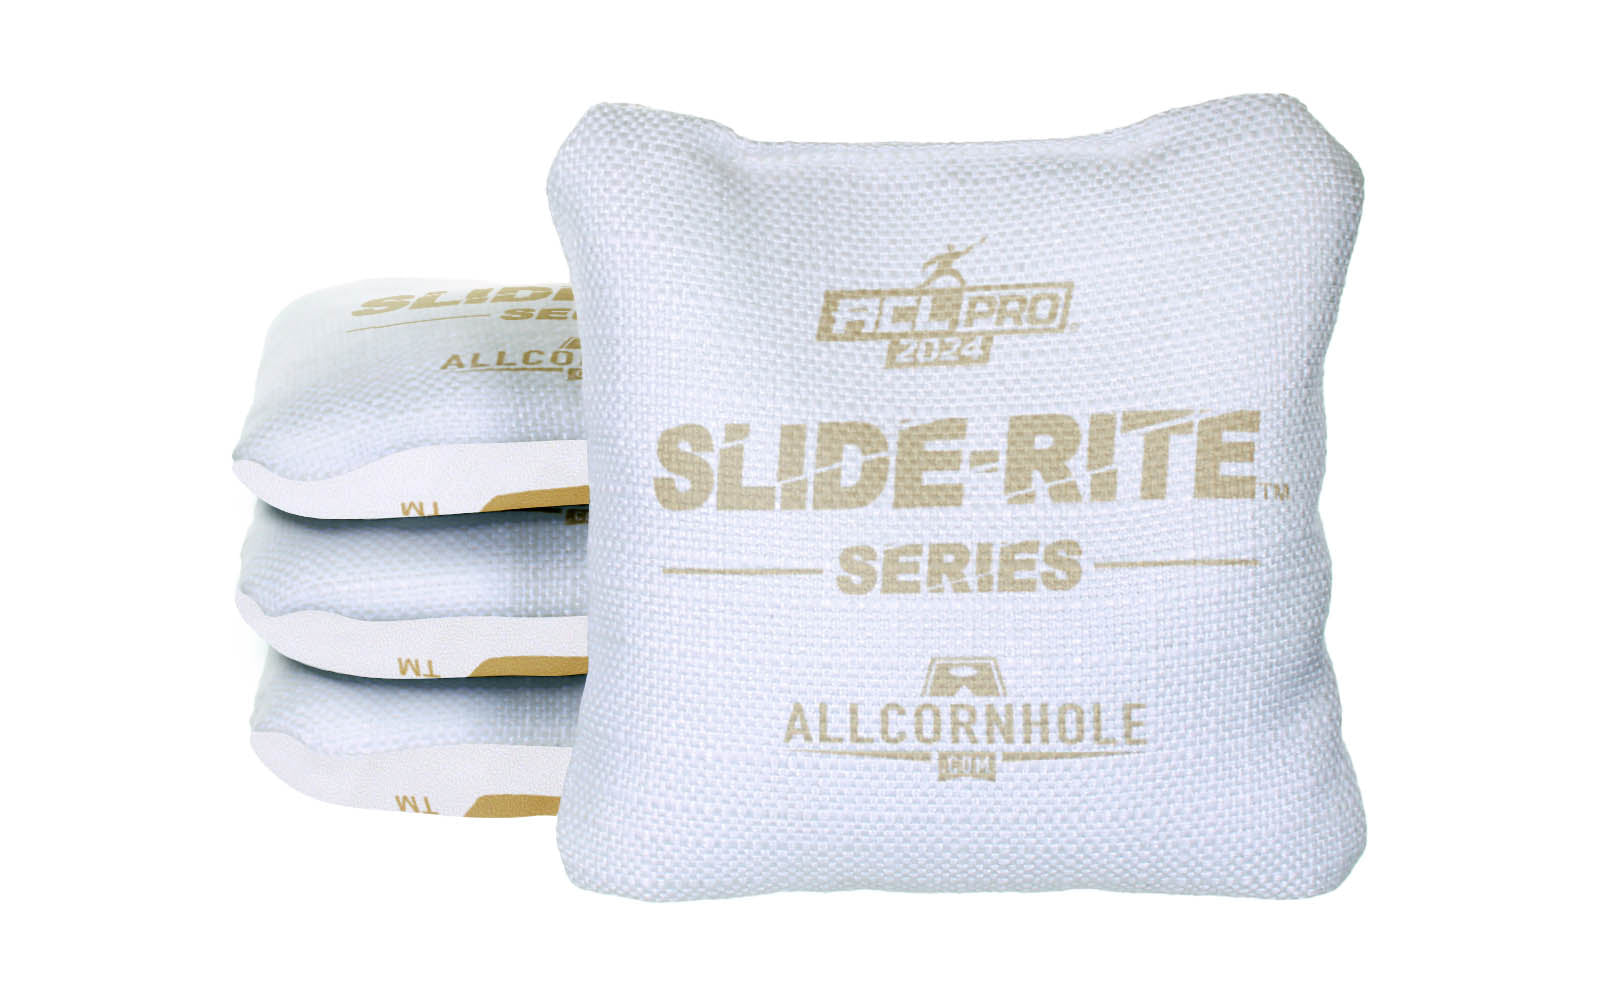 Officially Licensed Collegiate Cornhole Bags - AllCornhole Slide Rite - Set of 4 - University of North Carolina - Charlotte